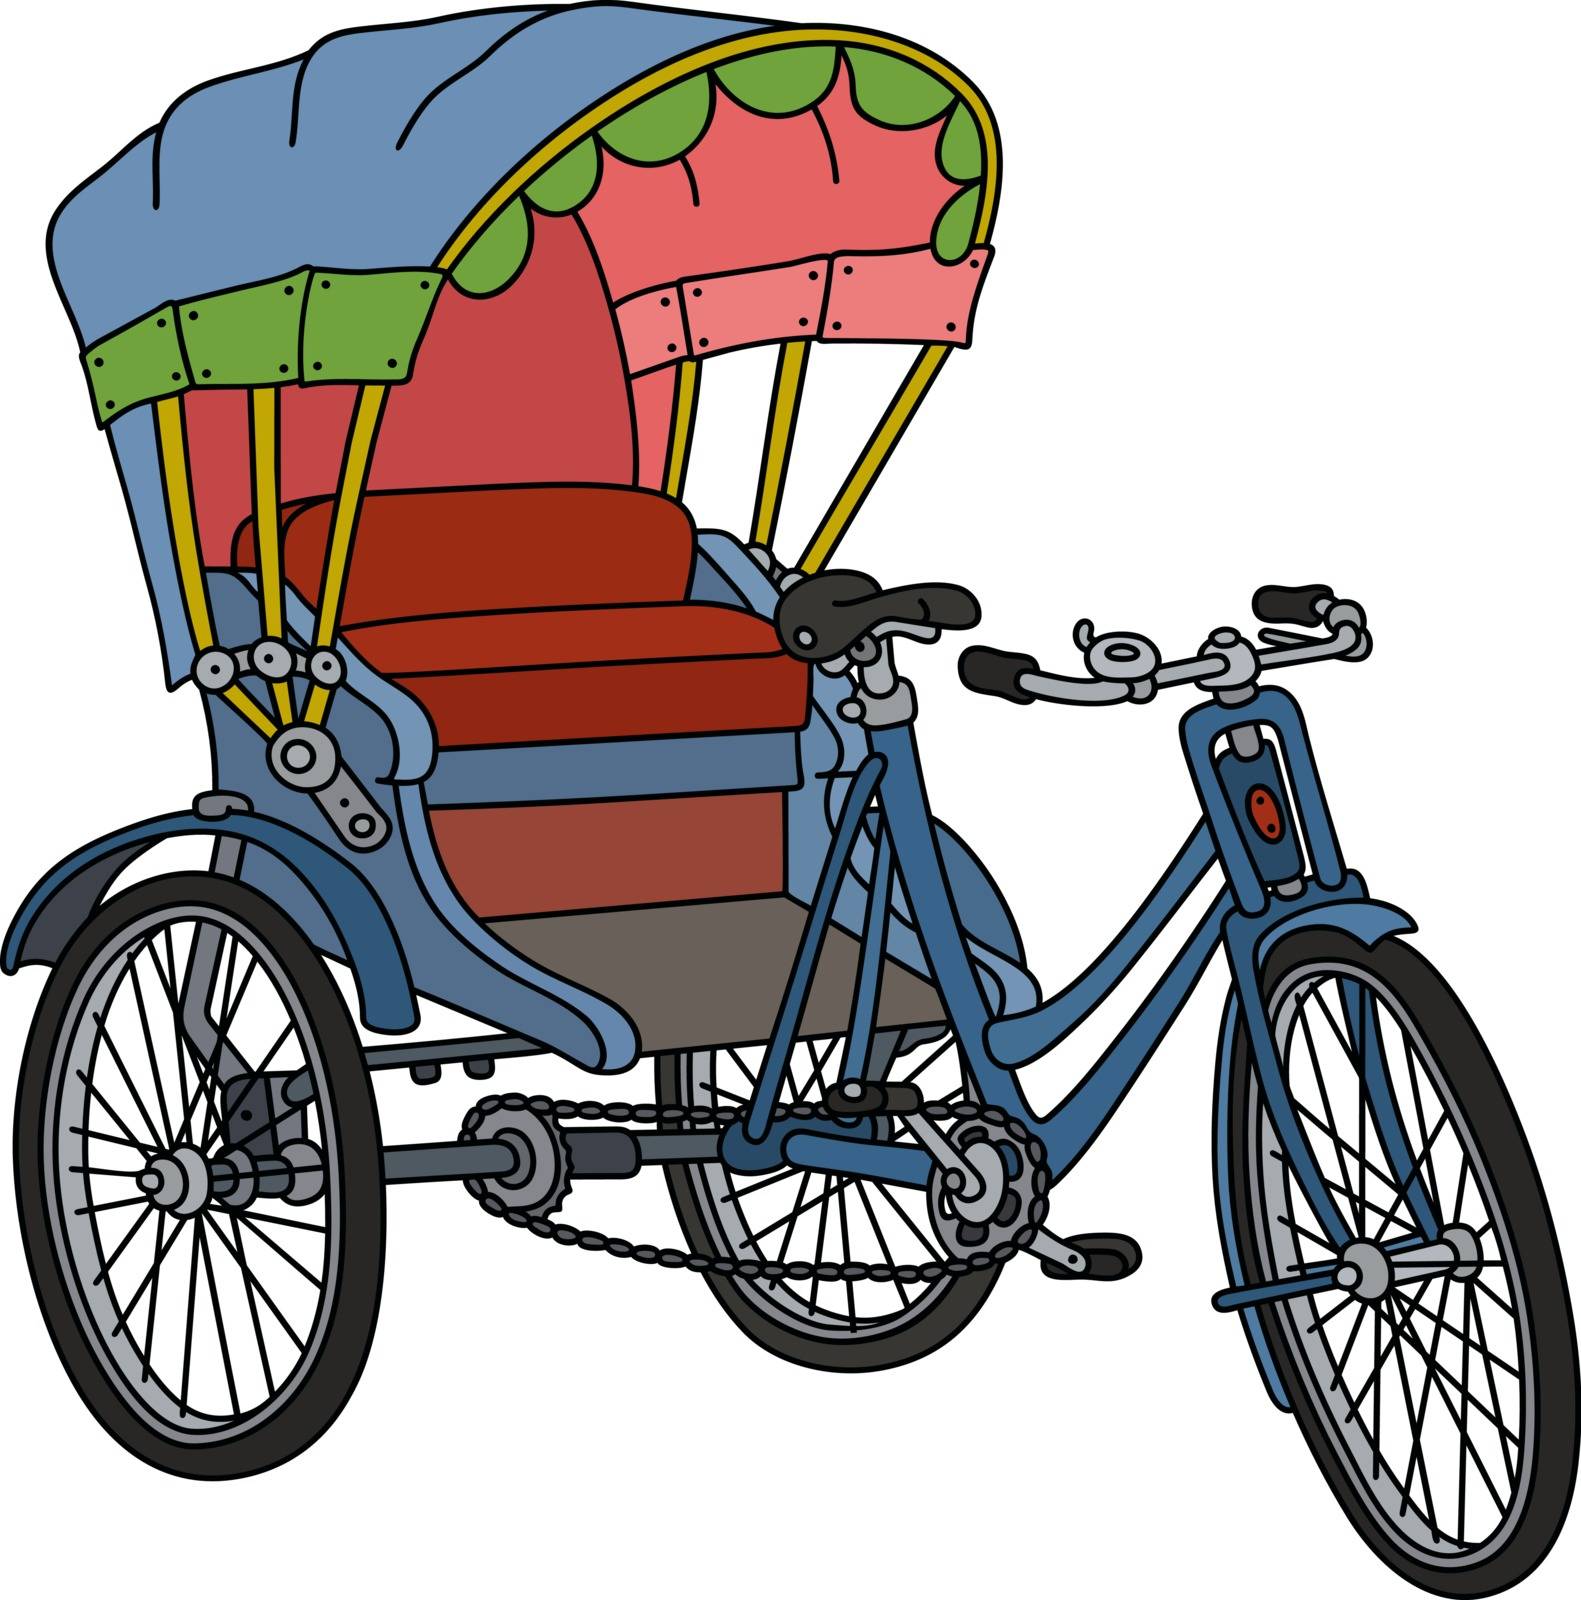 Classic cycle rickshaw by vostal